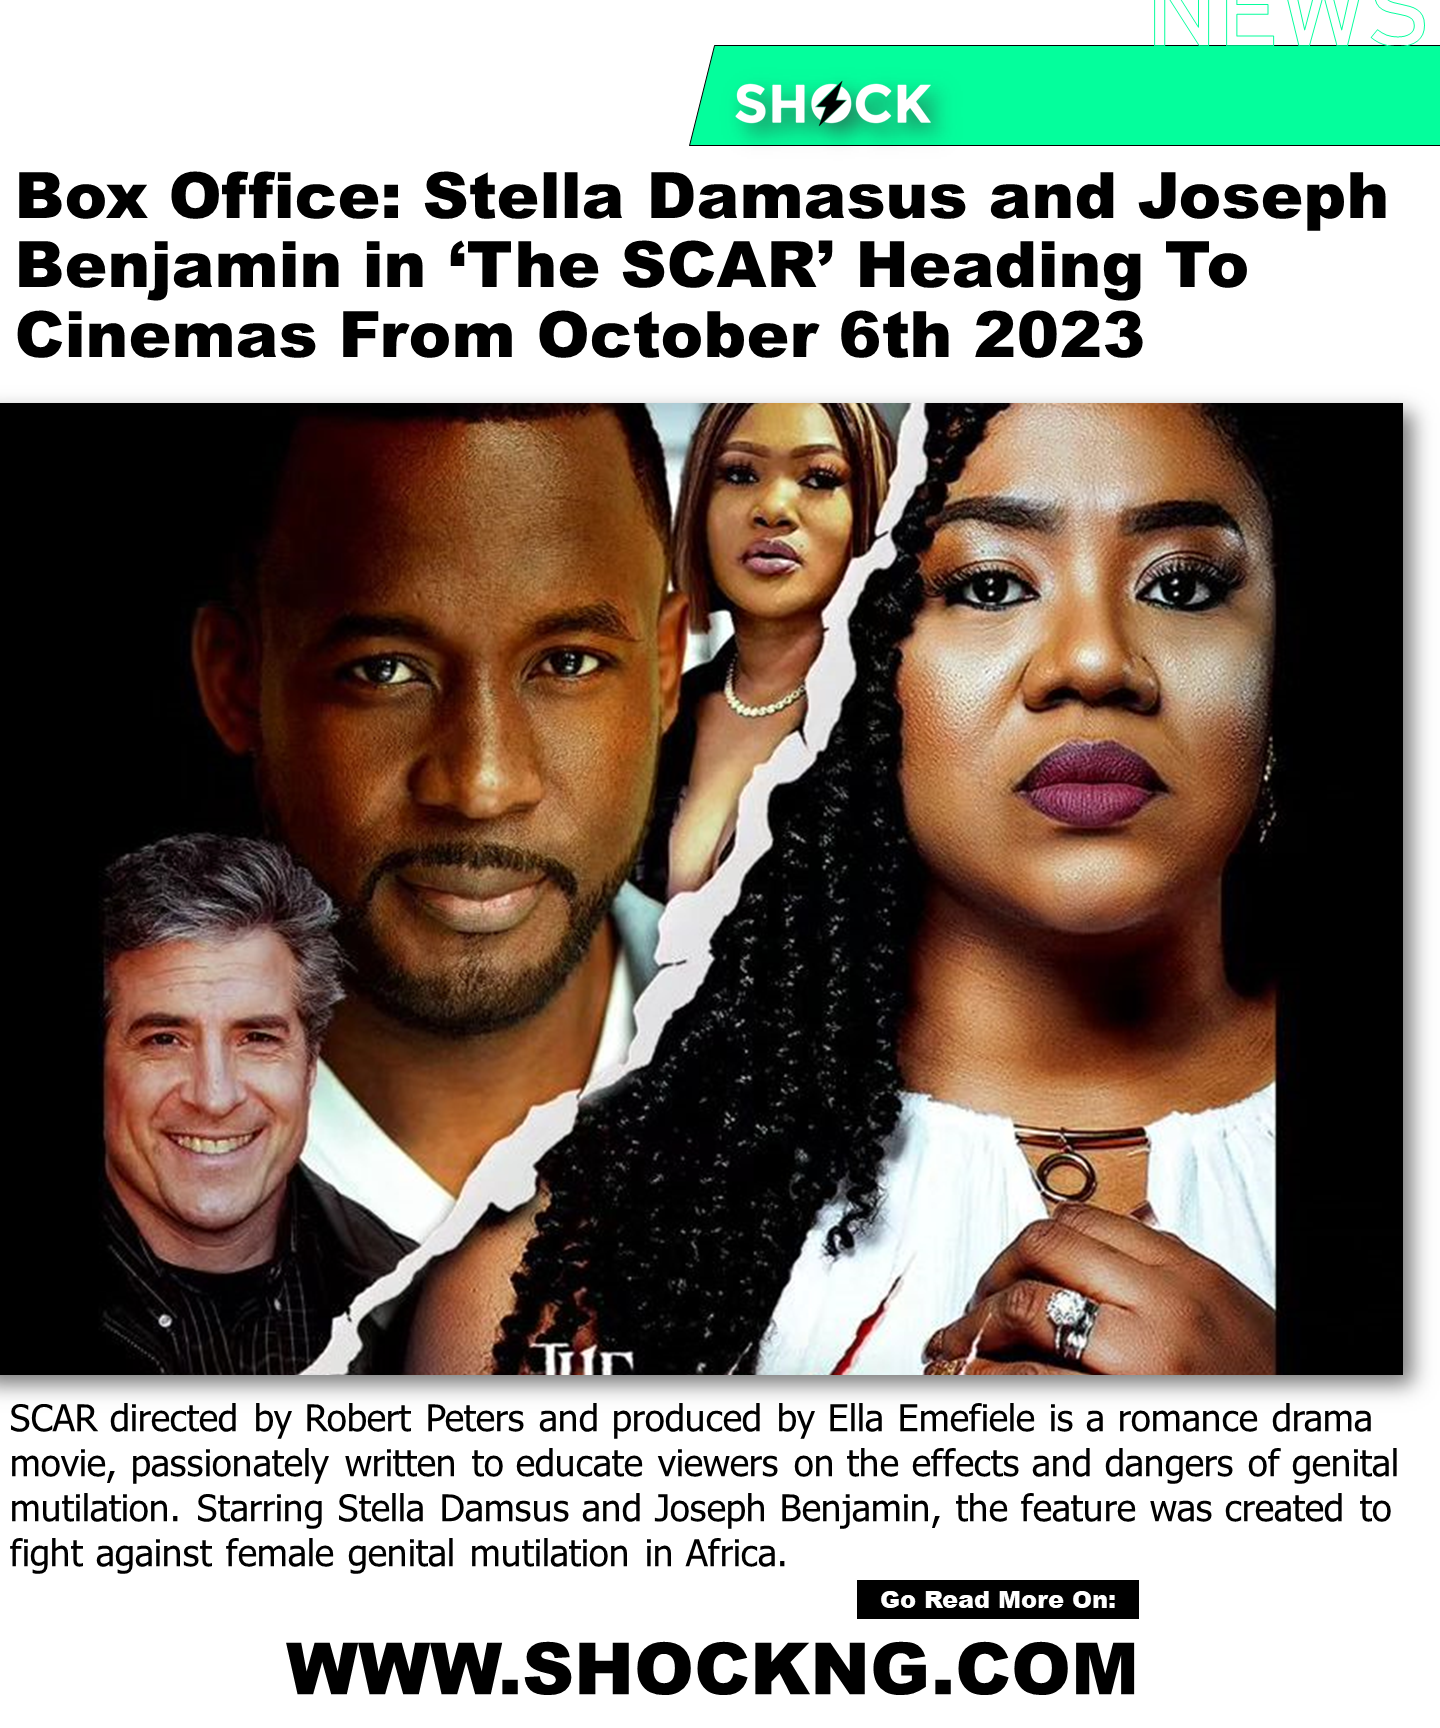 The Scar Movie in cinemas - Stella Damasus and Joseph Benjamin Star in ‘The SCAR’ heading to Cinemas October 6th